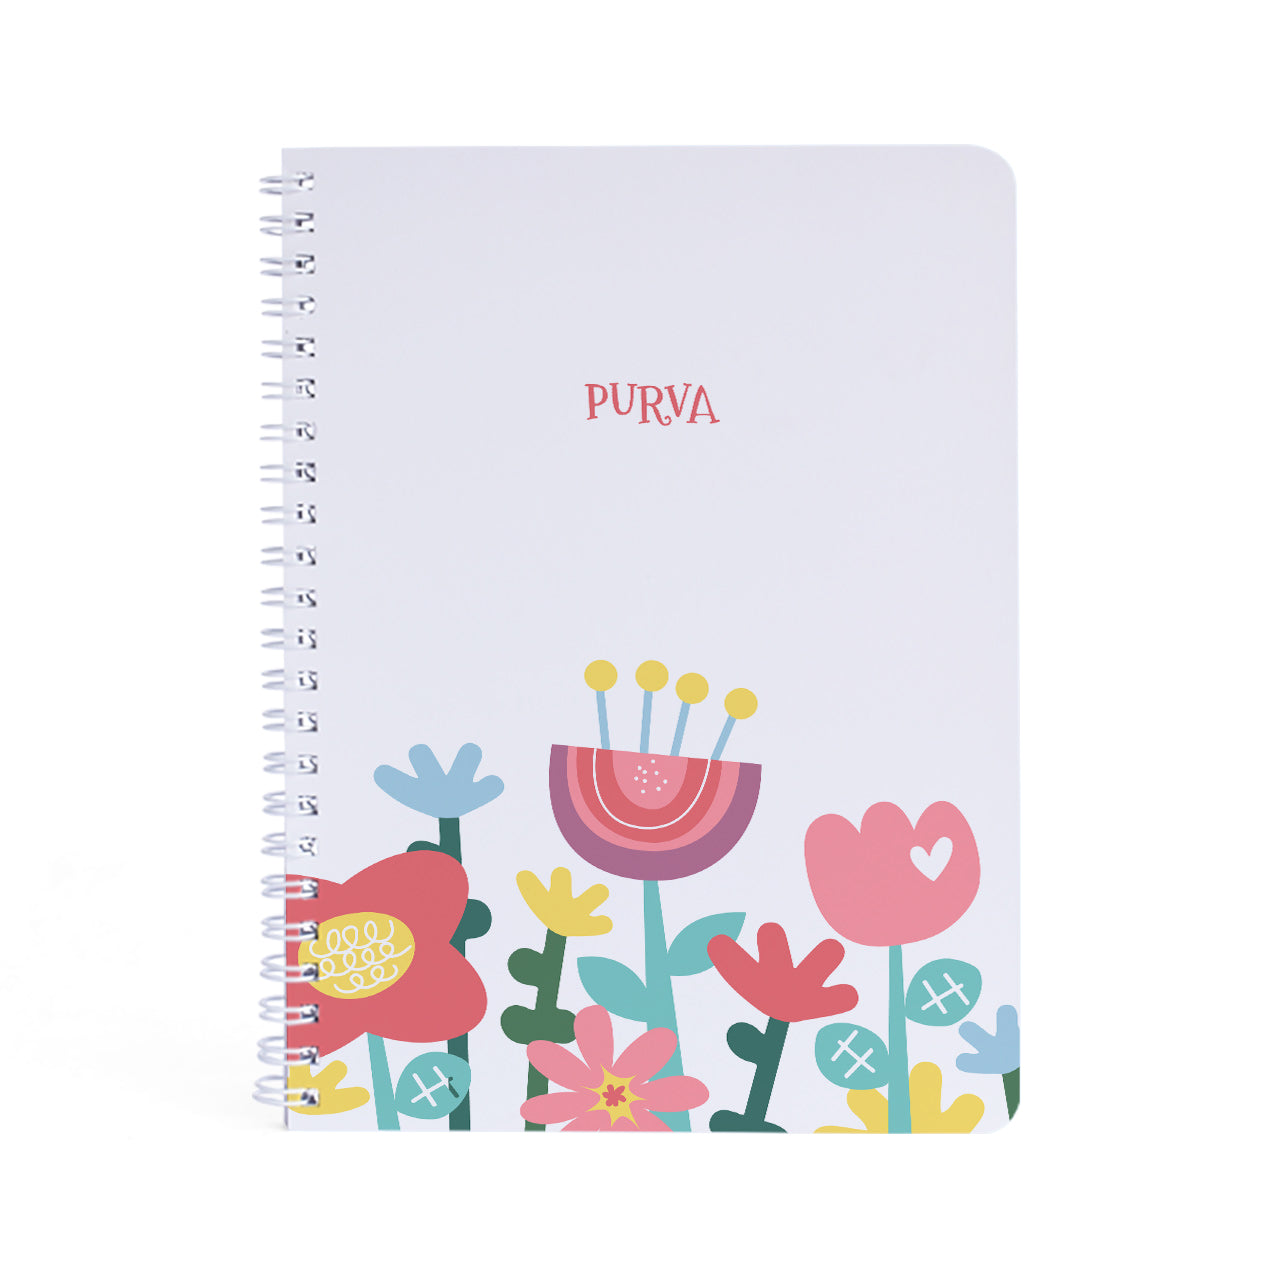 Personalised Spiral Notebook - Flower Power